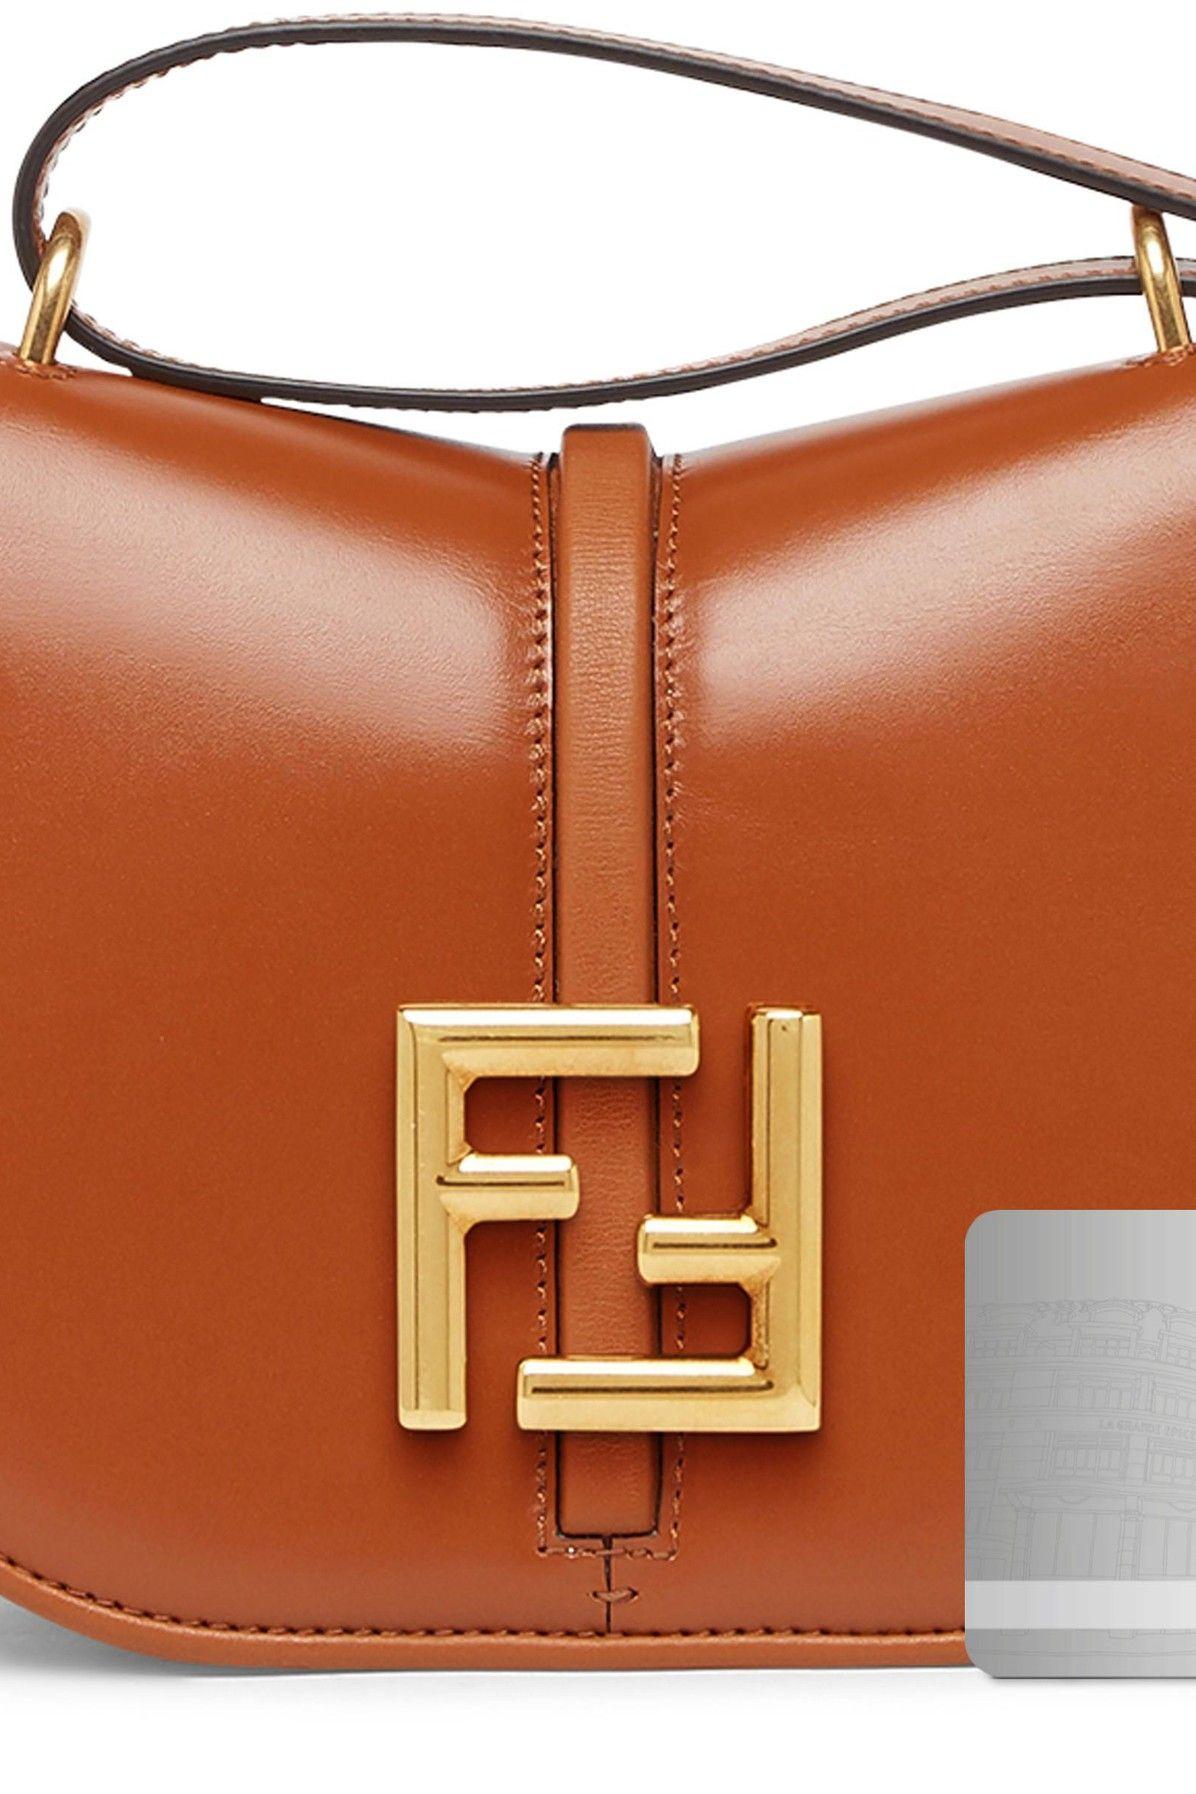 Fendi FF Embossed Mon Tresor Bucket Bag W/Red/Black (Retail $2490